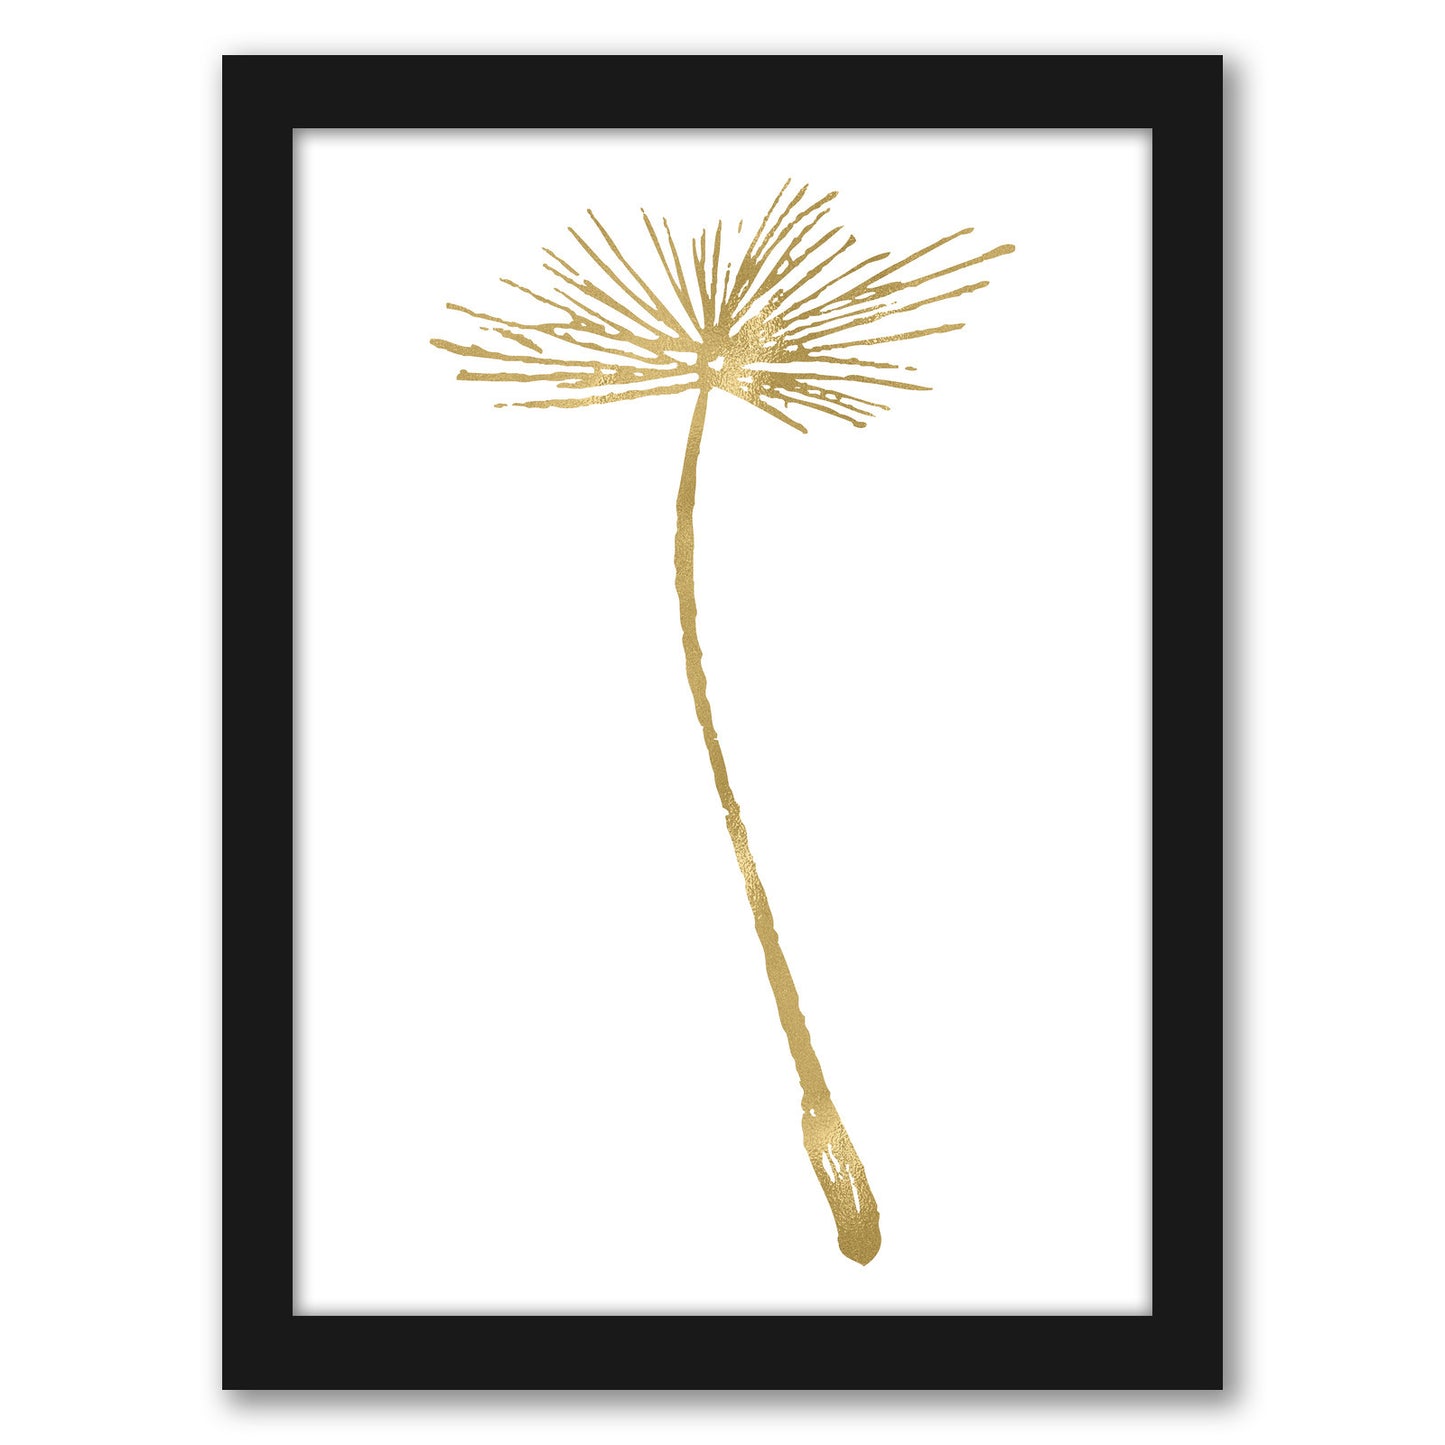 Dandelion 2 Gold On White by Amy Brinkman - Framed Print